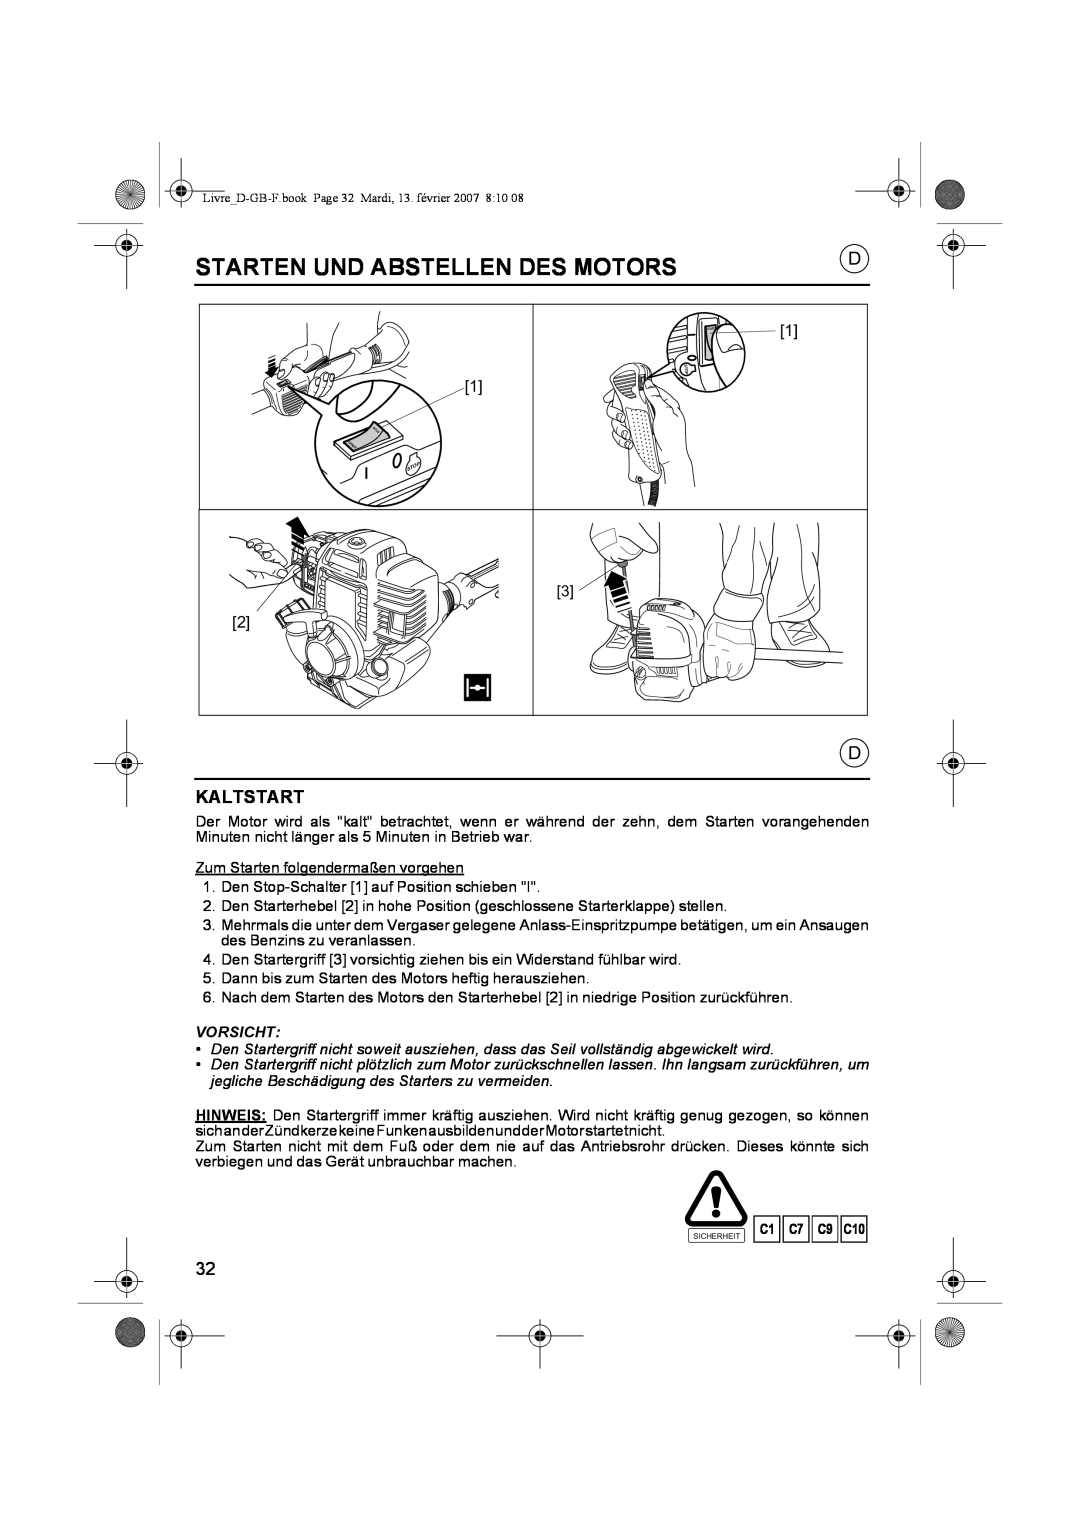 Honda Power Equipment UMK435E owner manual Starten Und Abstellen Des Motors, Kaltstart, C1 C7 C9 C10 